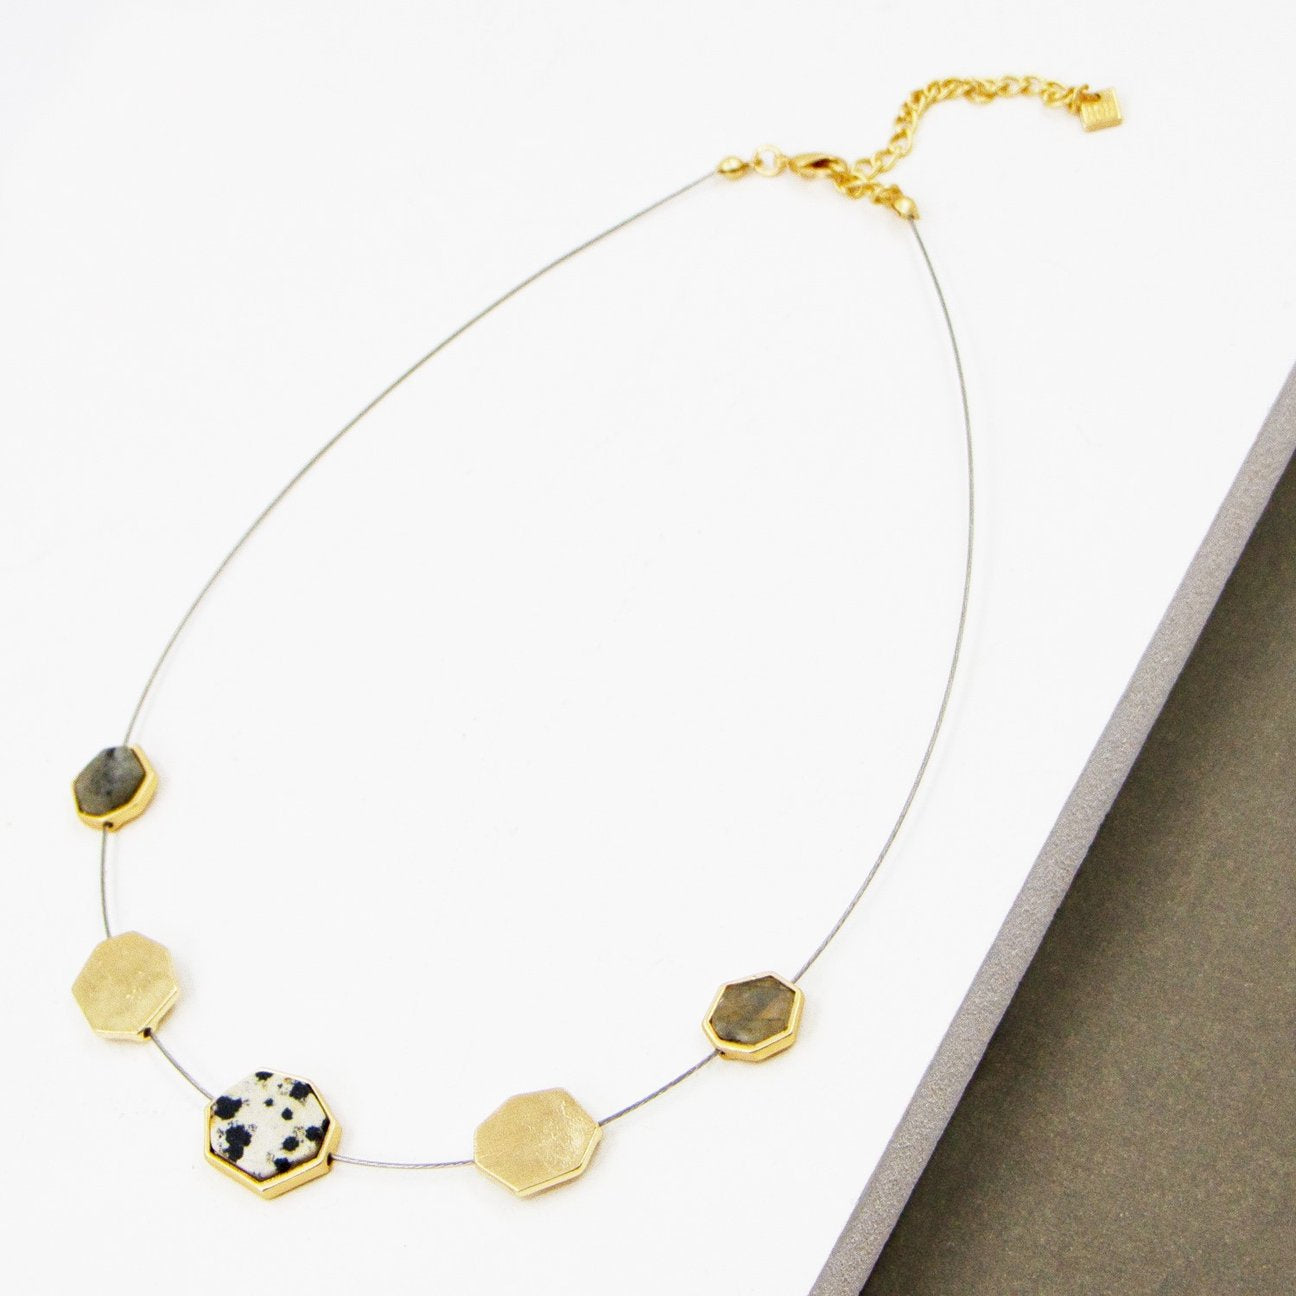 Geometric semi precious pendants on short wire necklace